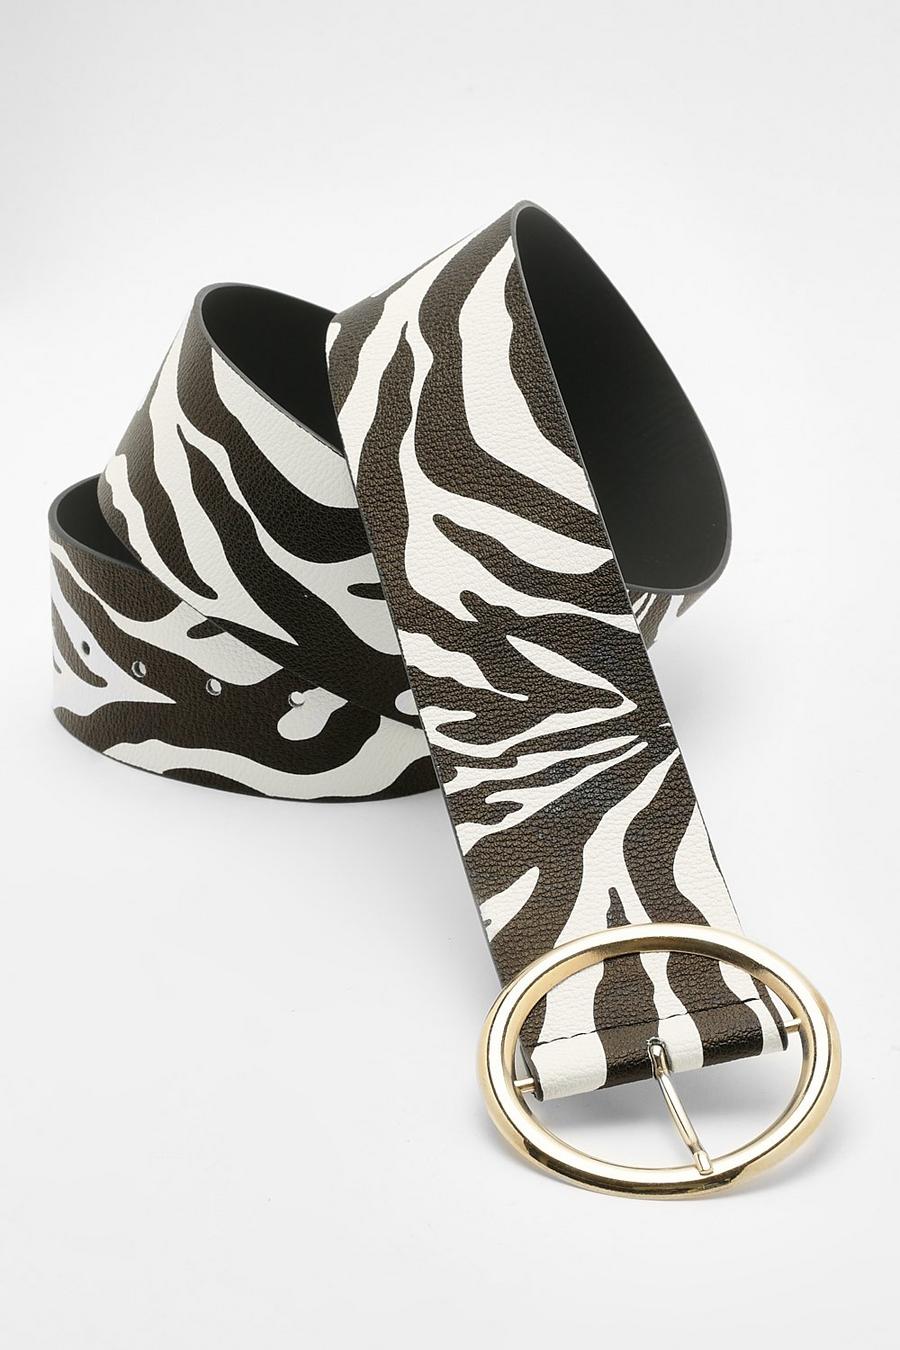 Zebra Plus Nepleren Zebraprint Met Dikke Taille Riem